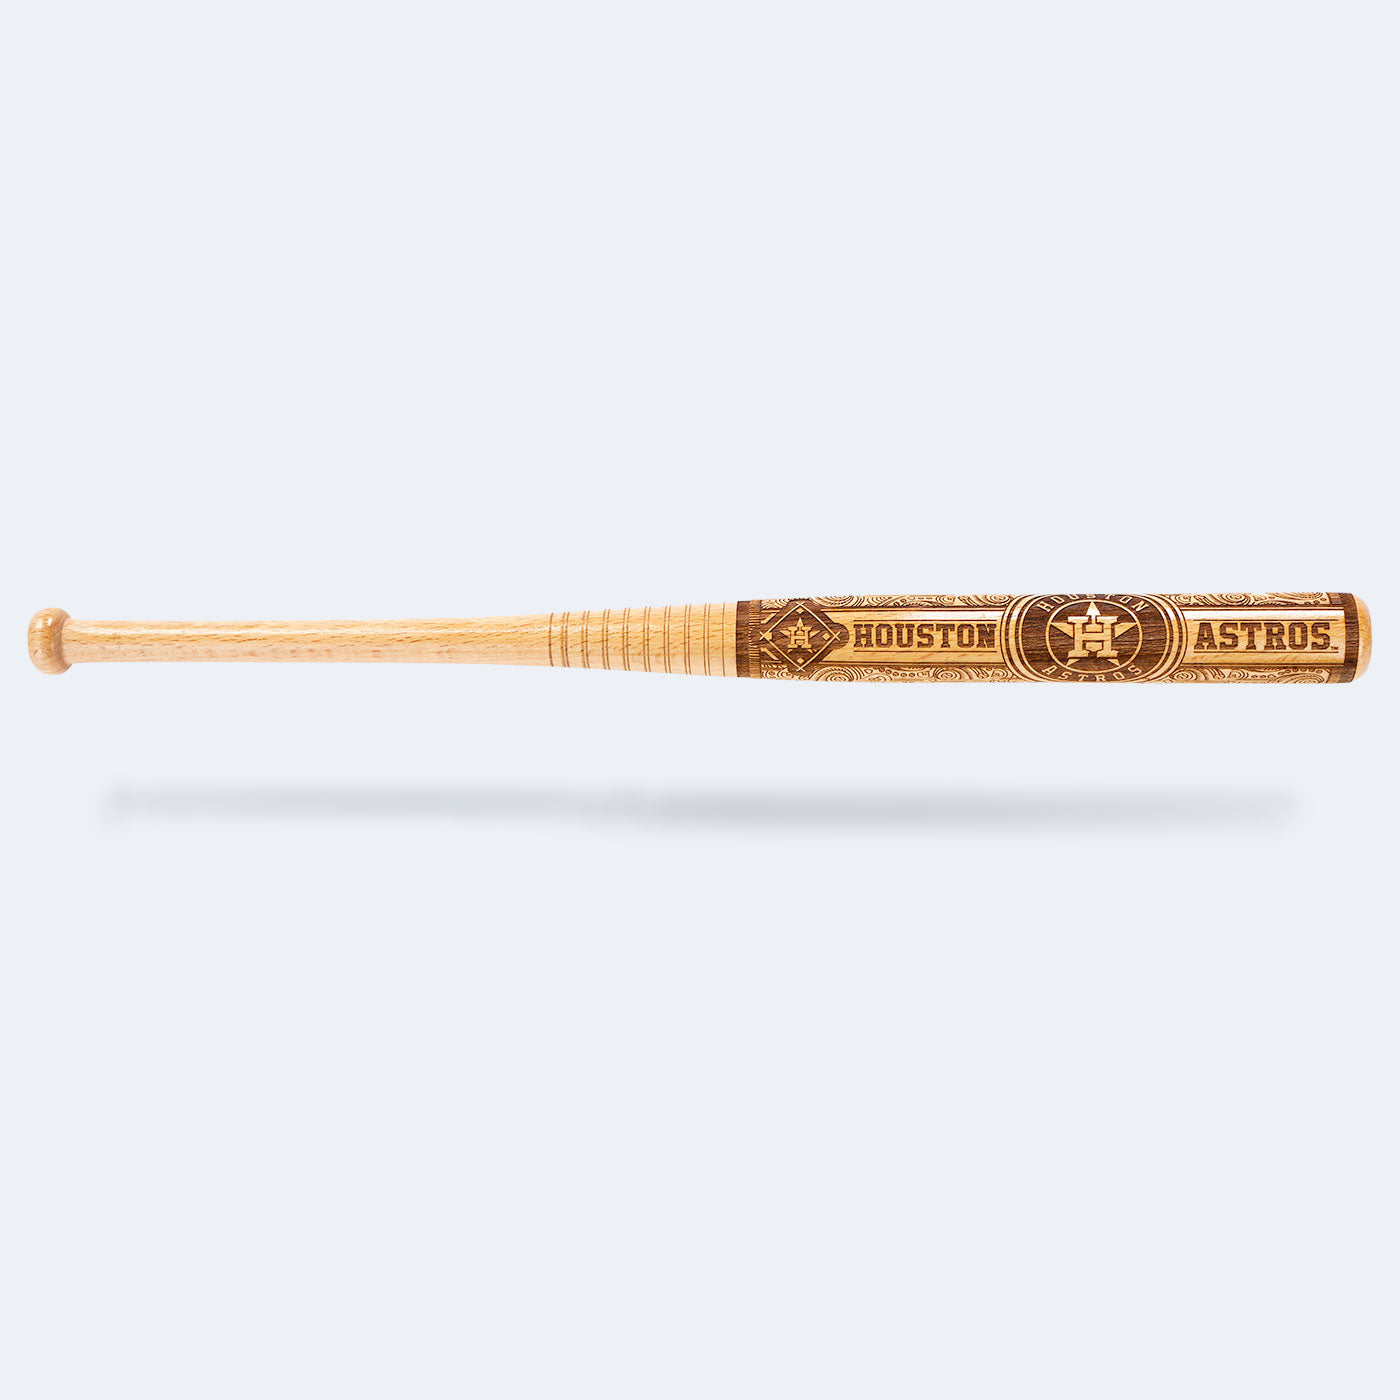 Small Batch No. 9 Wood Bat Home Plate Ornaments – The Baseball